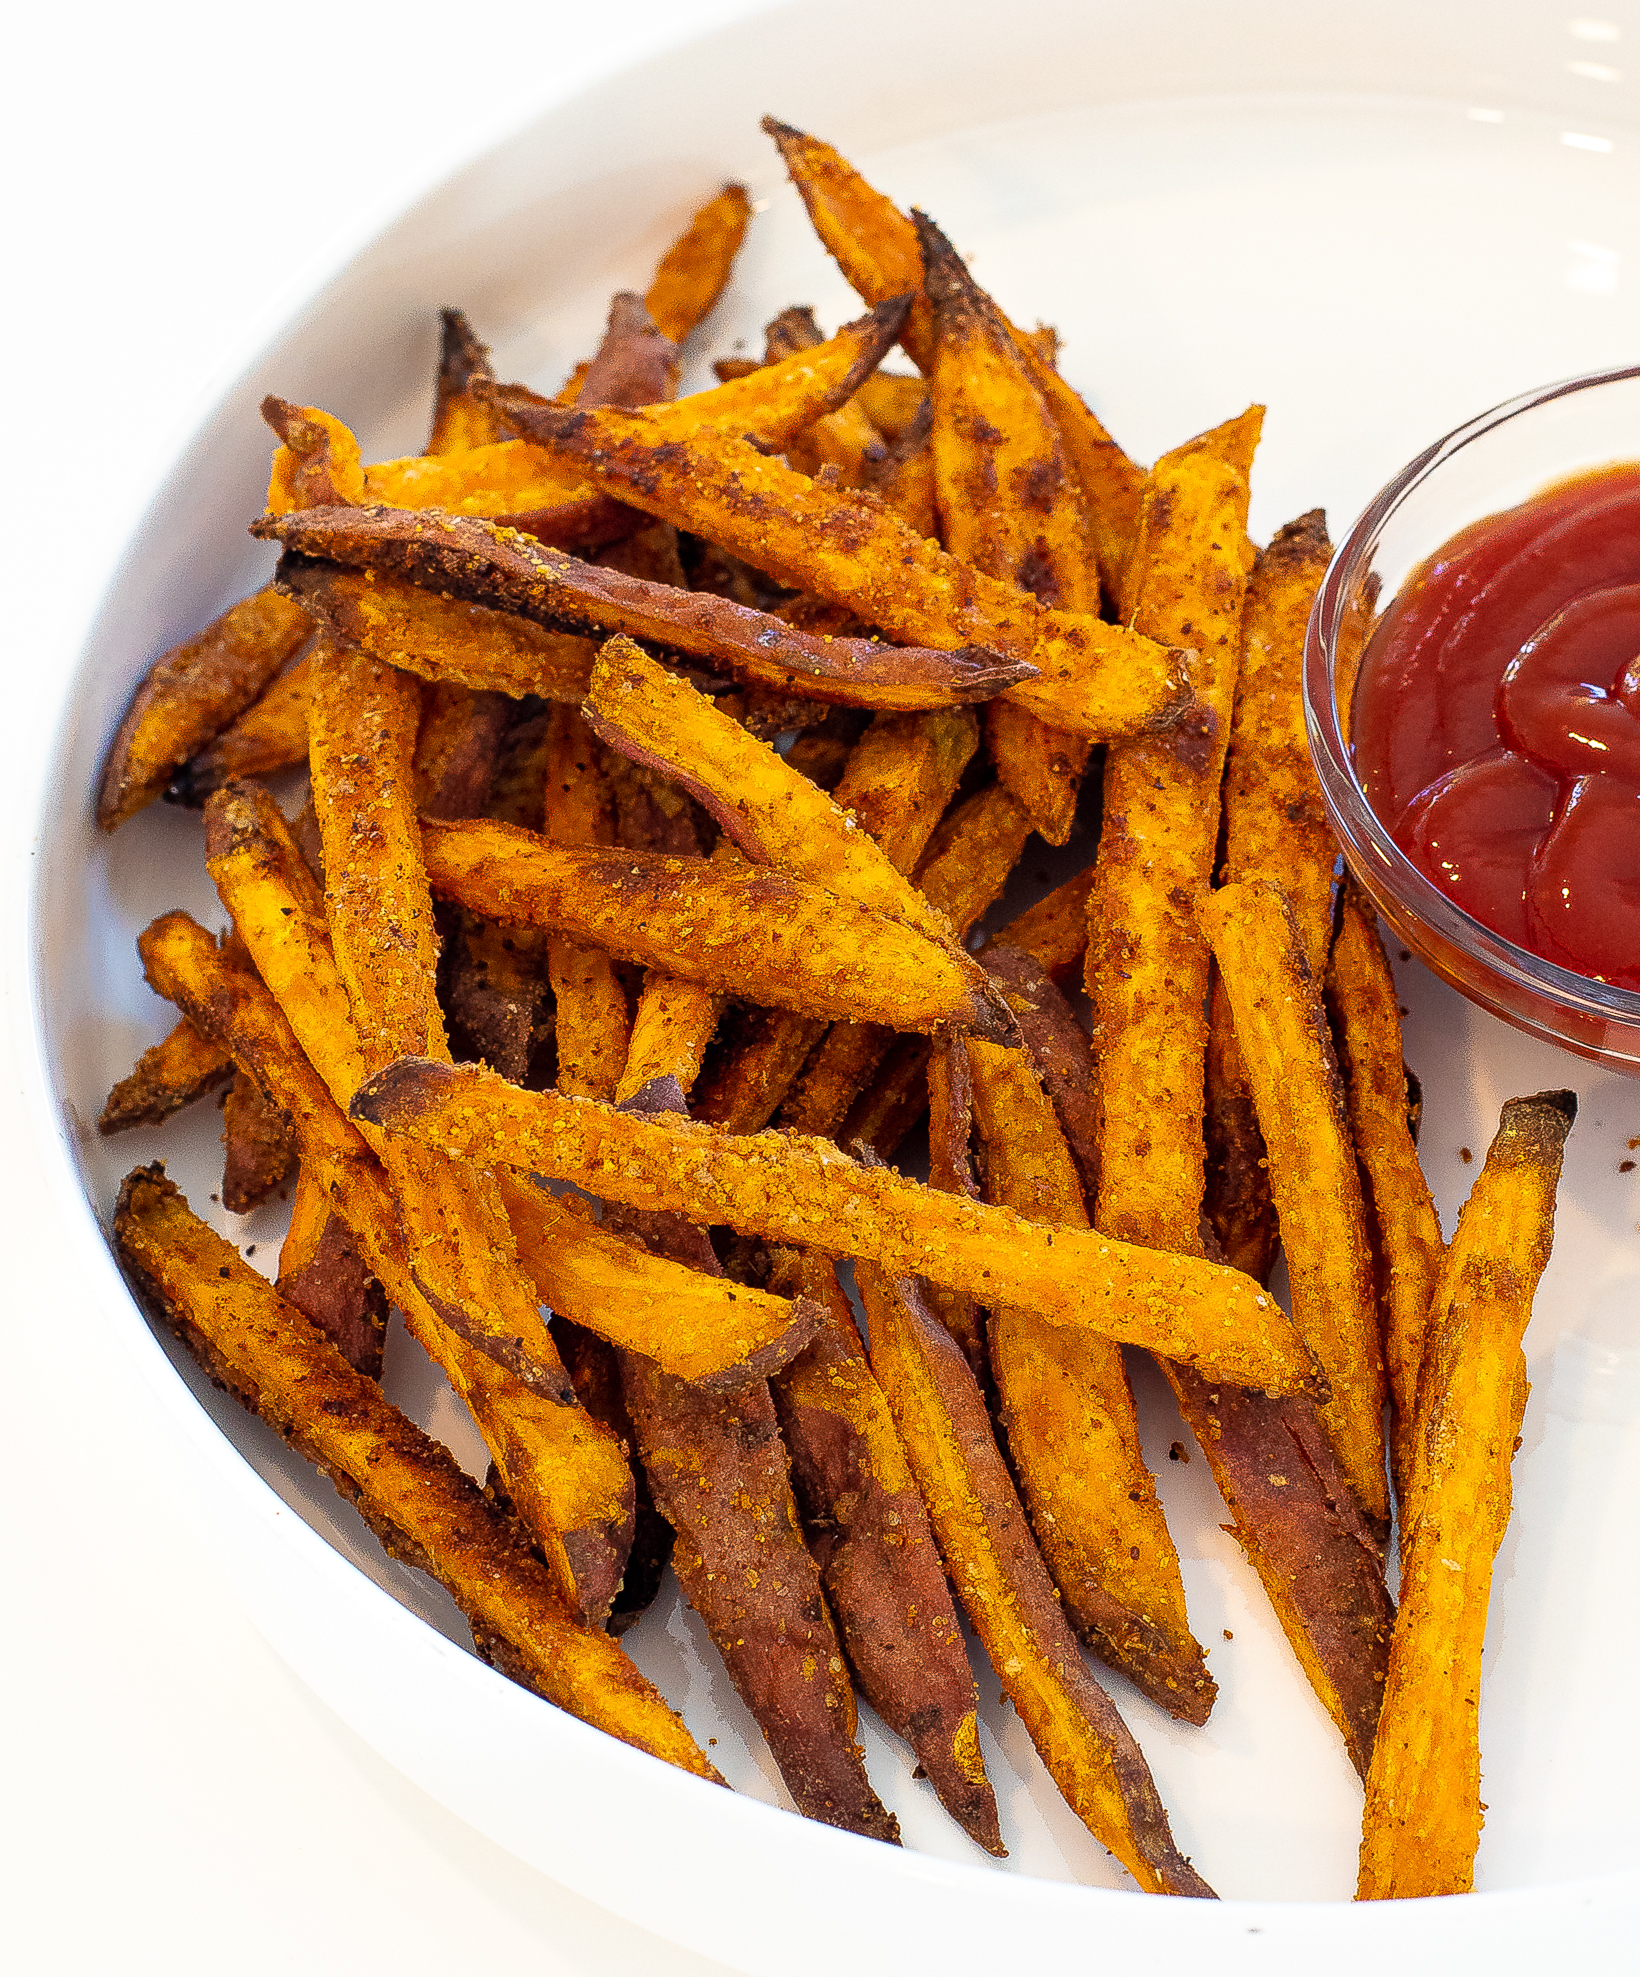 https://chefsavvy.com/wp-content/uploads/baked-sweet-potato-french-fries.jpg